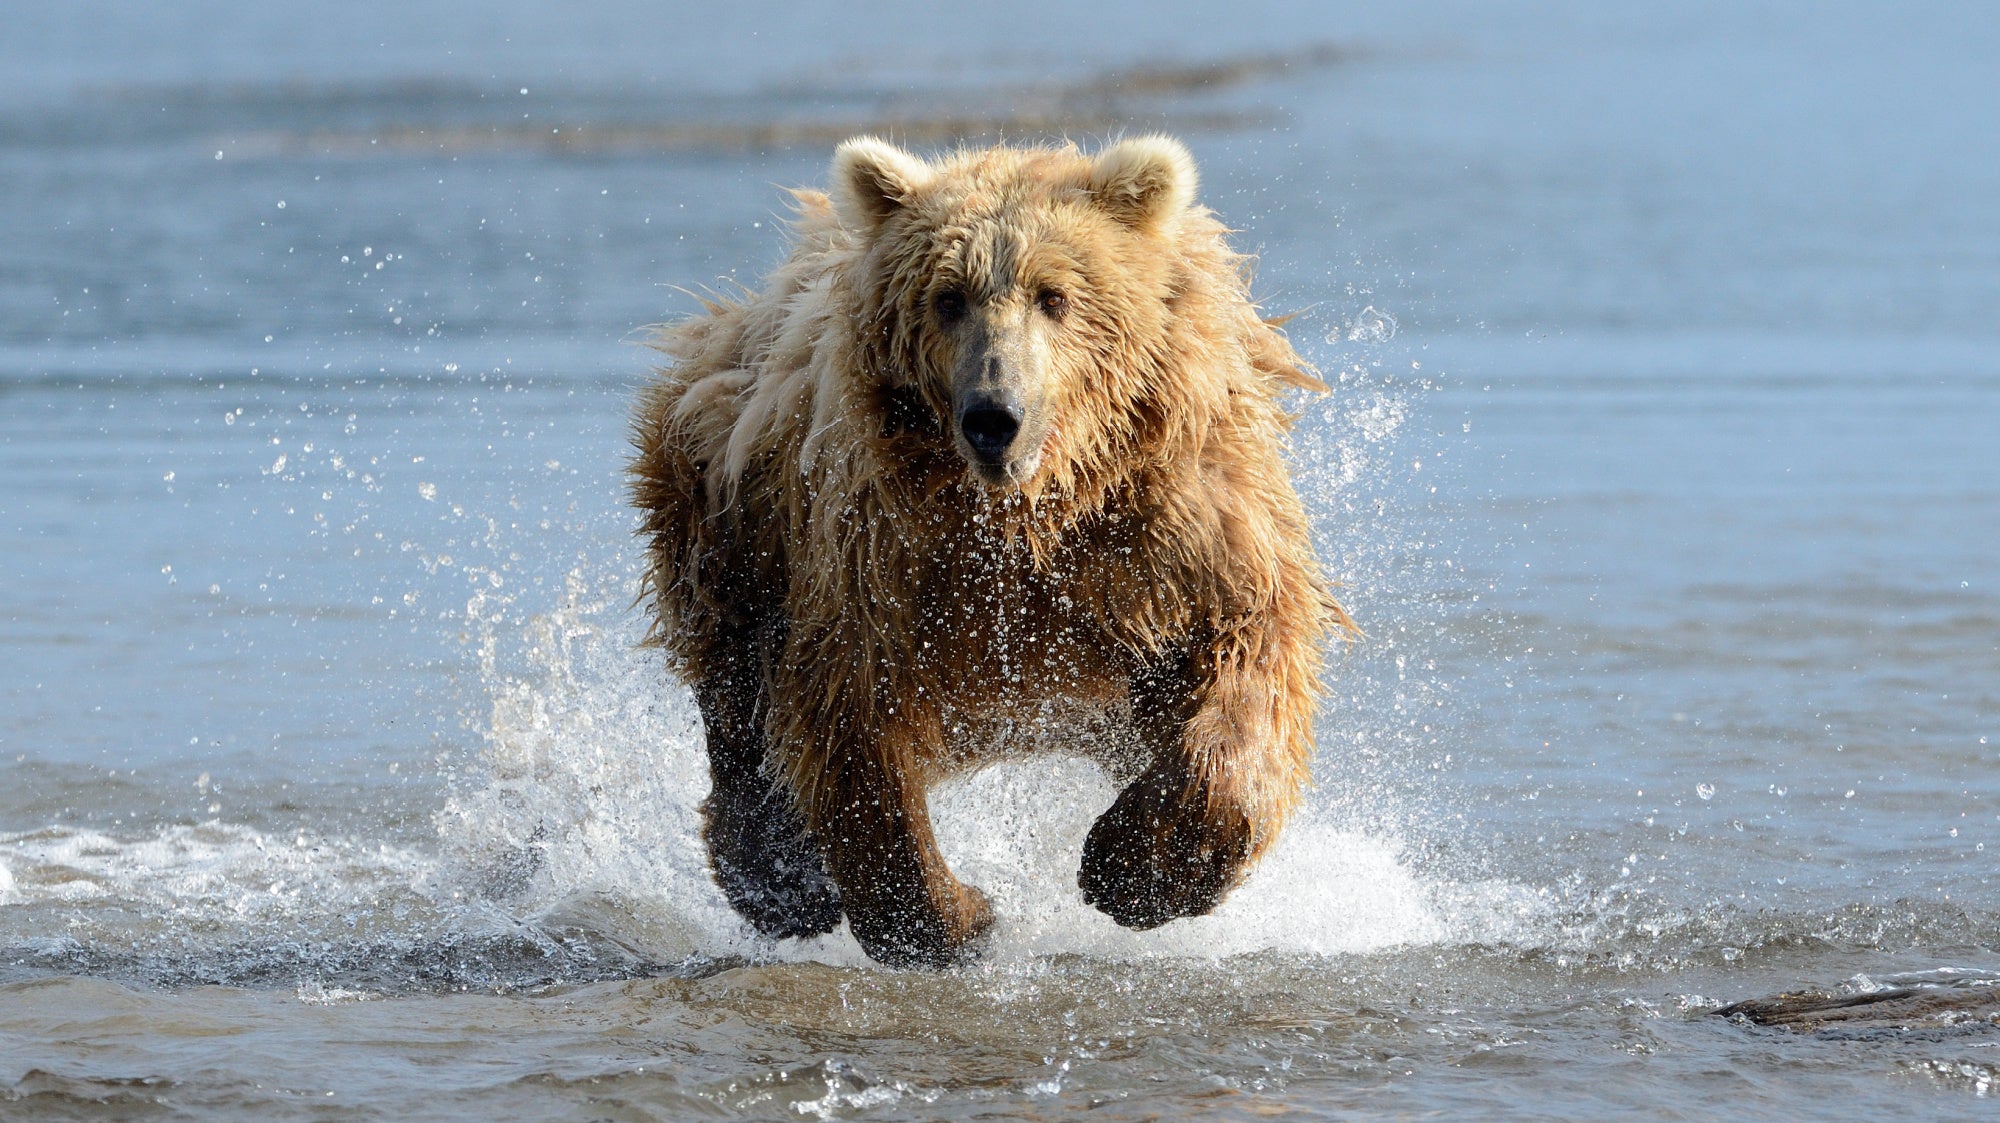 how fast can a bear run